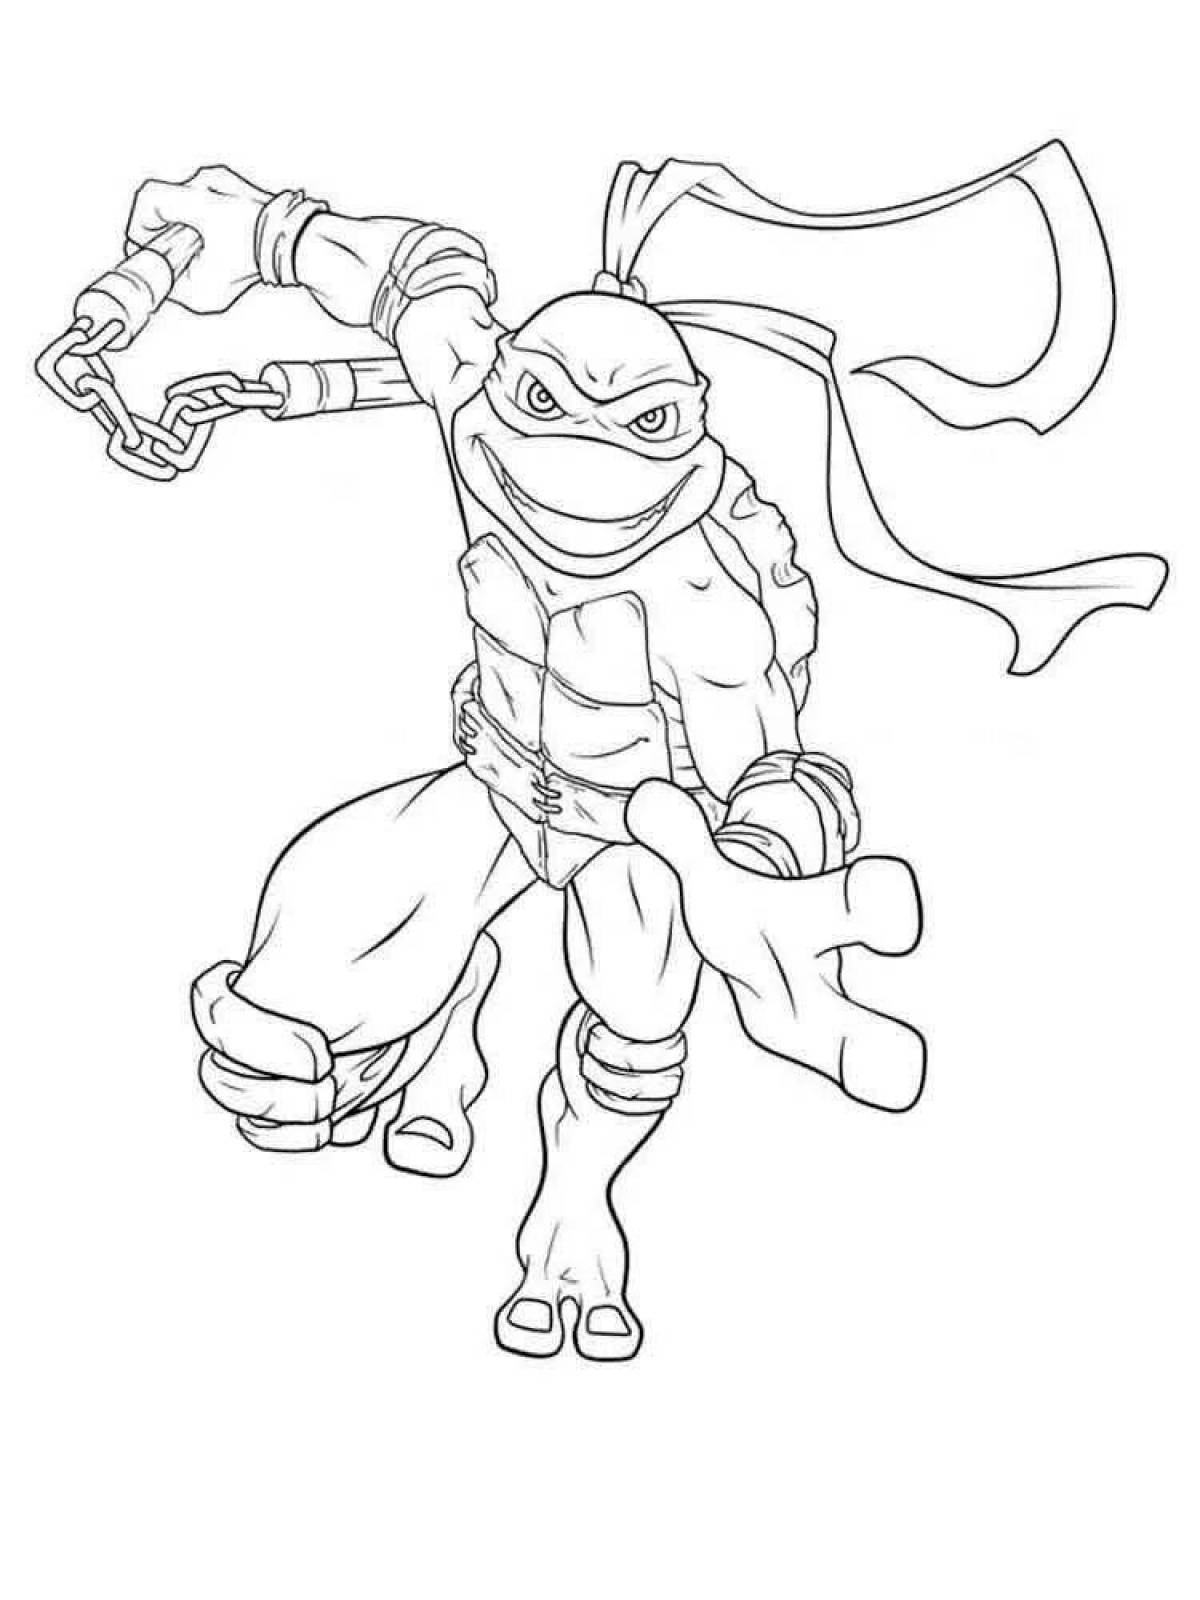 A fascinating drawing of the Teenage Mutant Ninja Turtles